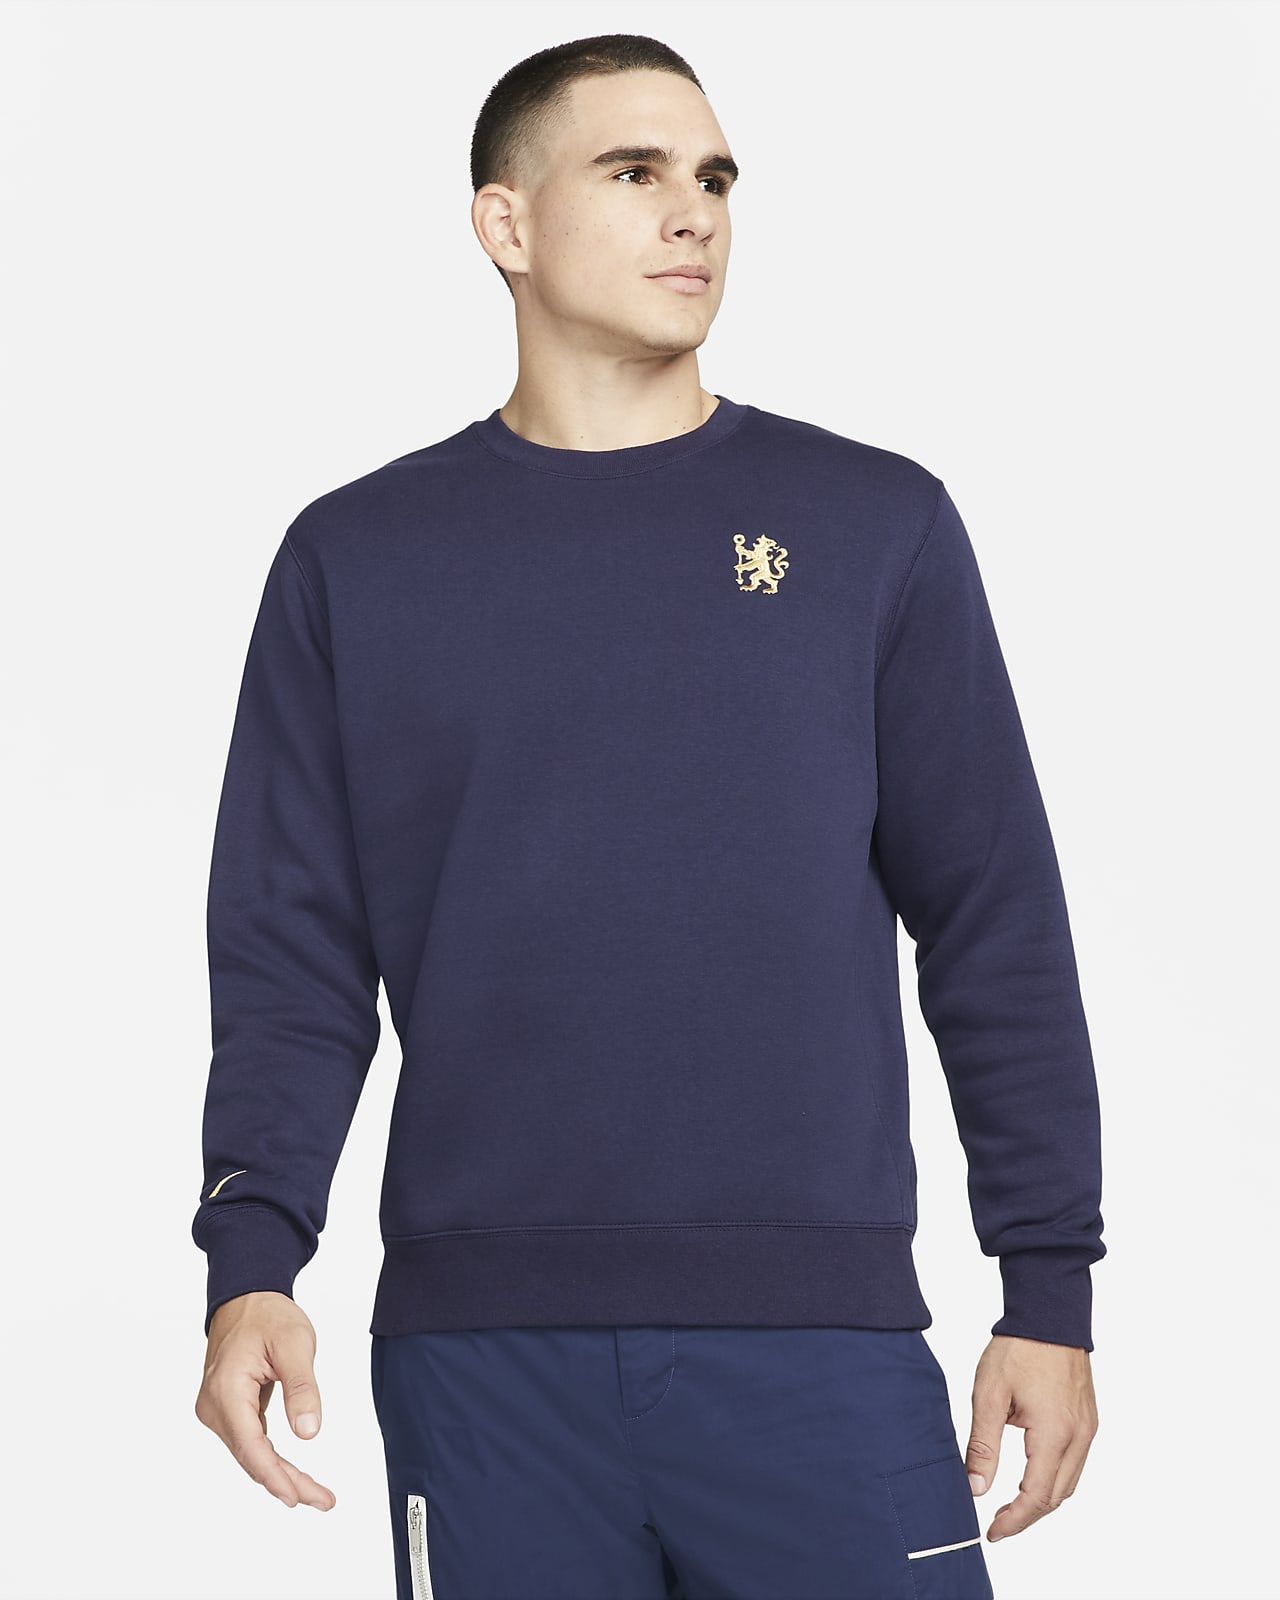 Cintura pereza Creo que Chelsea FC Men's Fleece Crew Sweatshirt. Nike.com